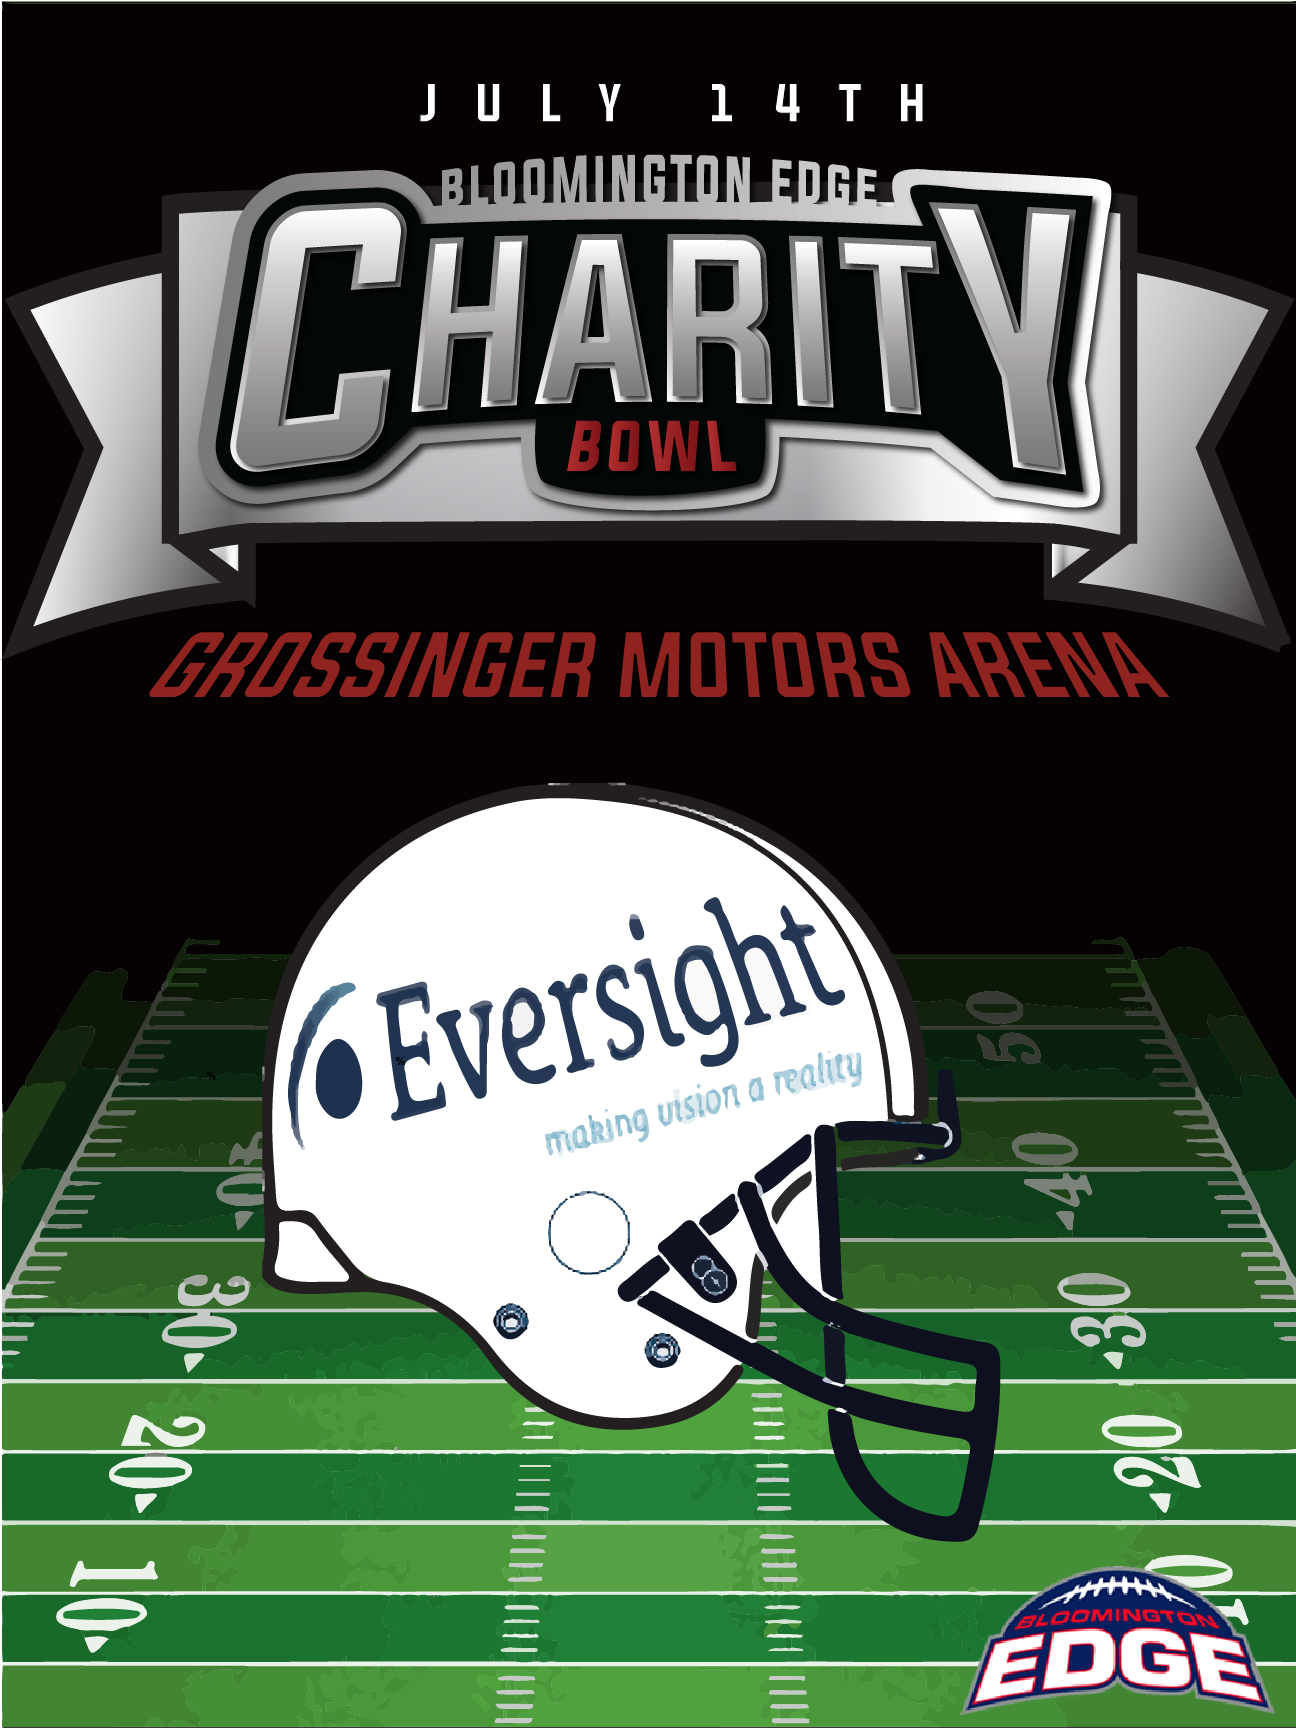 Bloomington Edge Charity Bowl